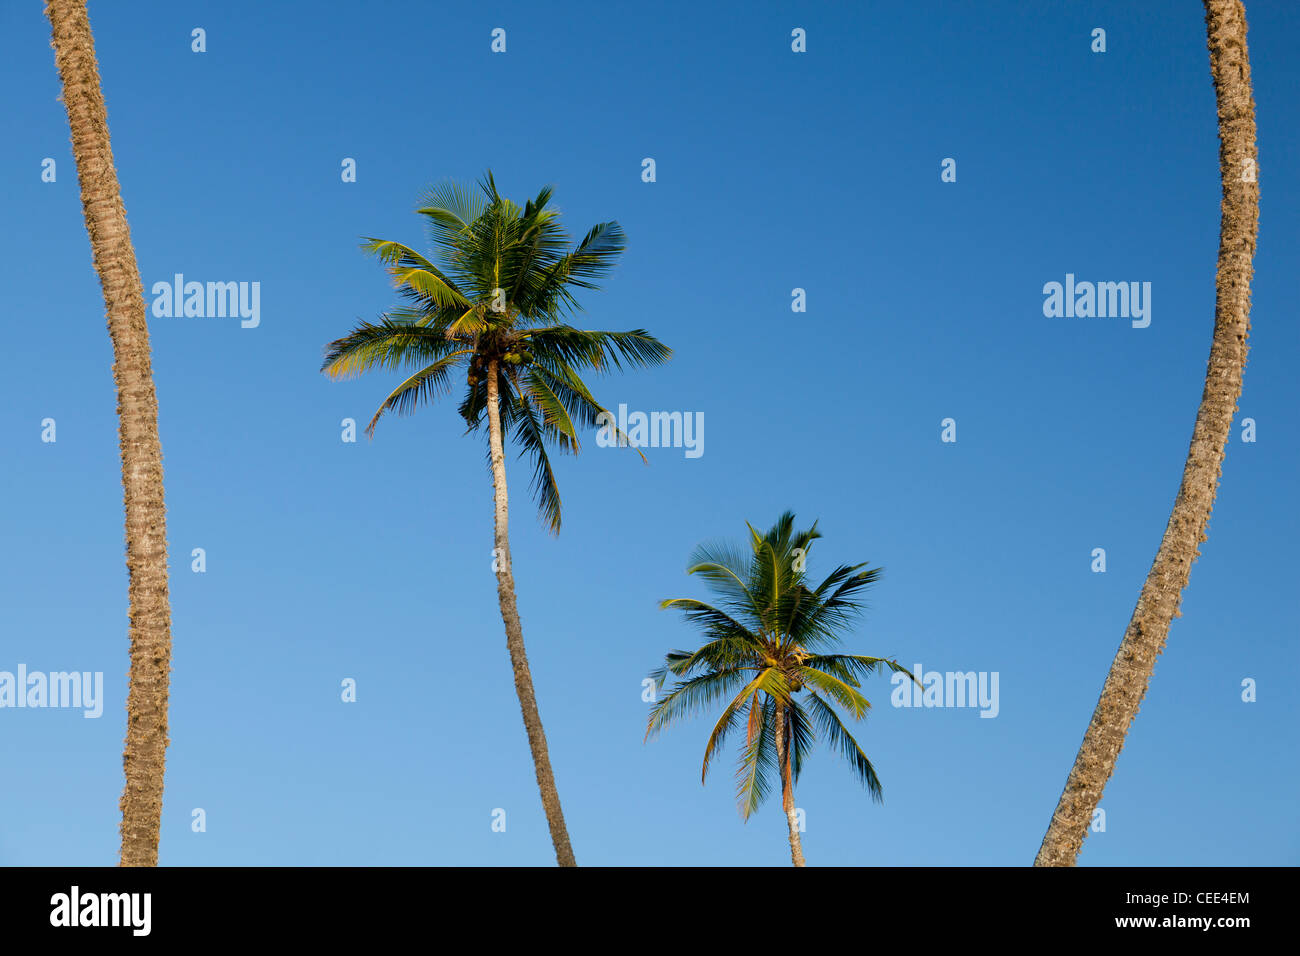 Tropical palm trees with a blue sky Tangalla Sri Lanka Asia Stock Photo